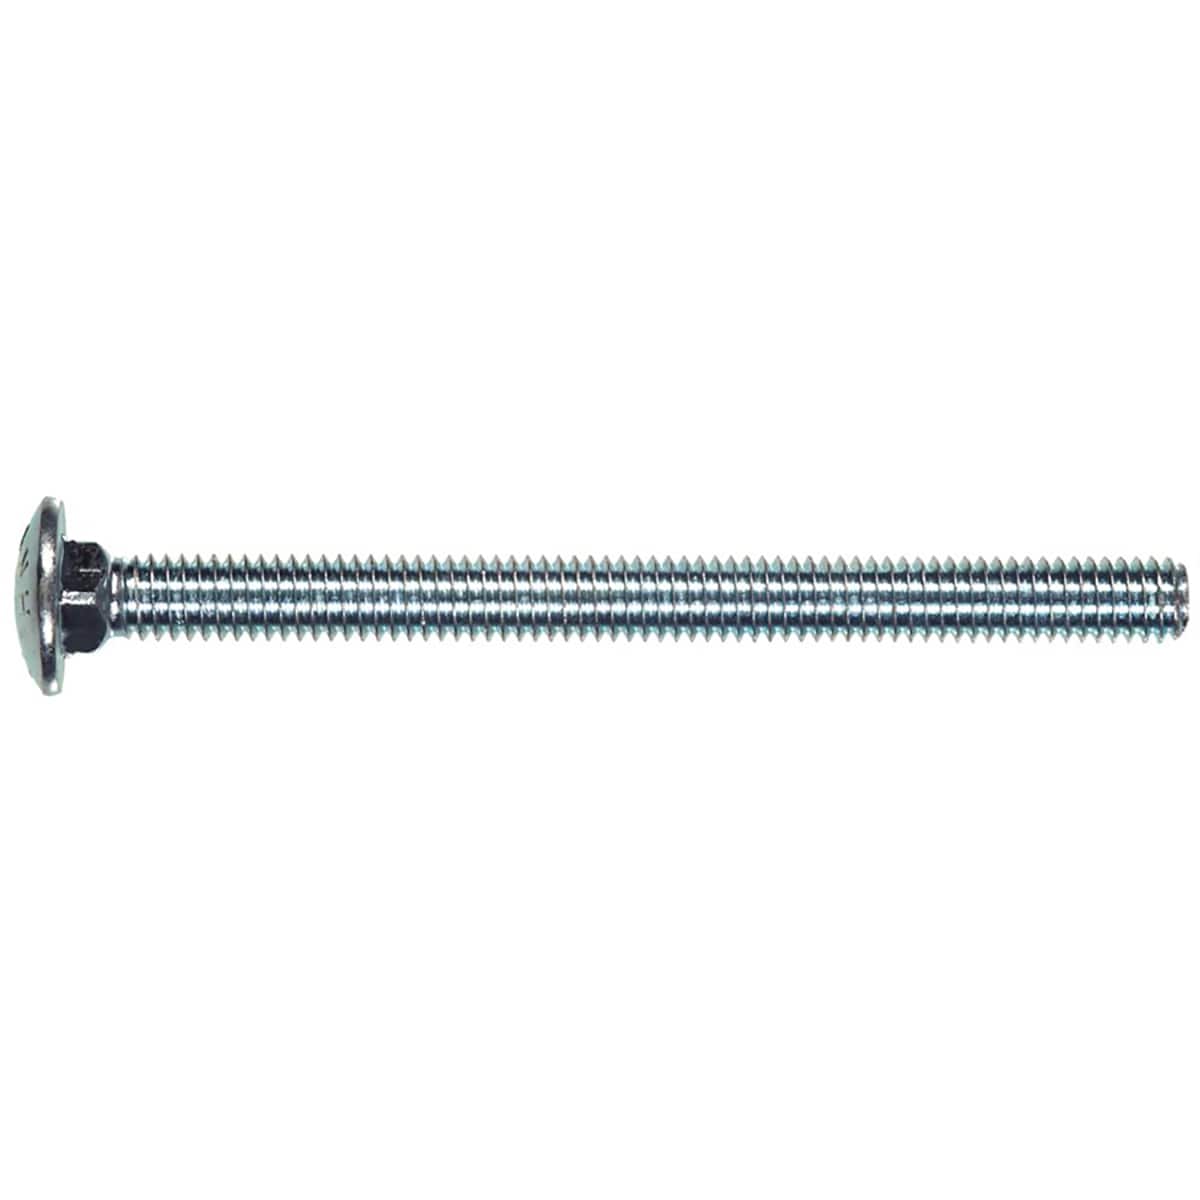 screws Zinc Plated 3/8-16x2" Coarse Thread Grade 5 Carriage Bolts 5 